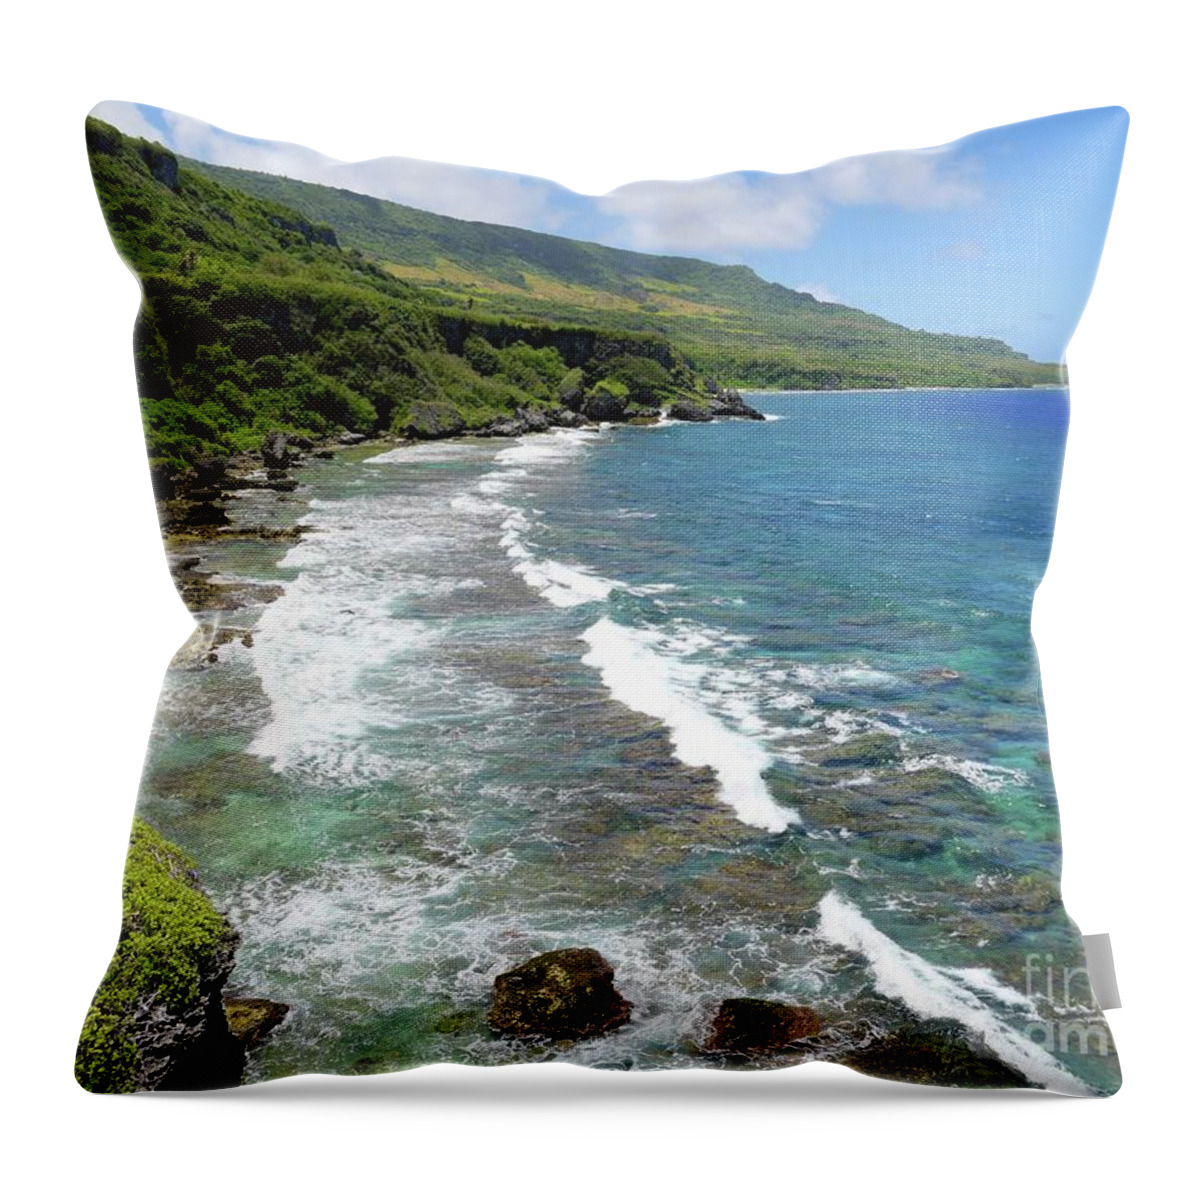 Rota Throw Pillow featuring the photograph Coastal View, Rota by On da Raks